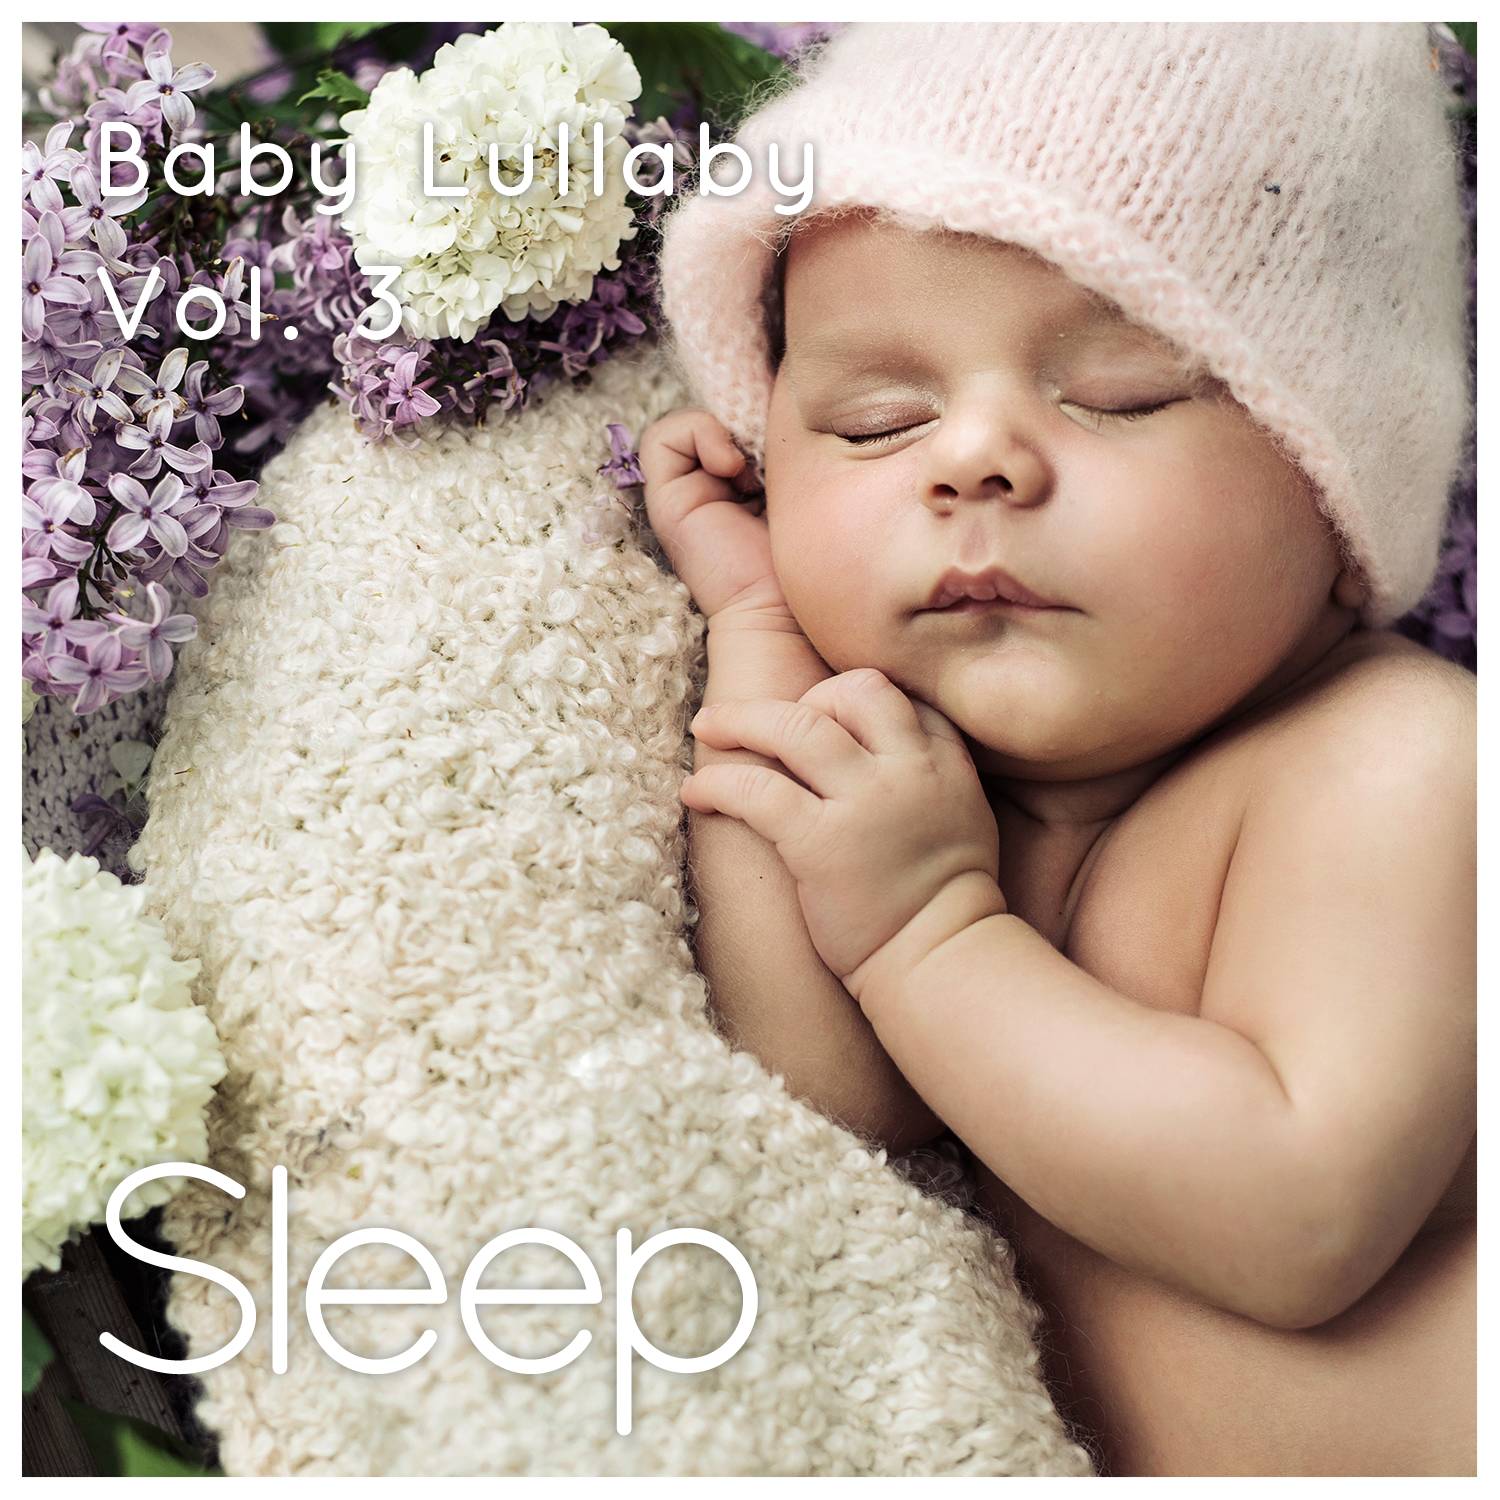 Baby Sleep - The Tumble Dryer Lullaby, Vol. 3